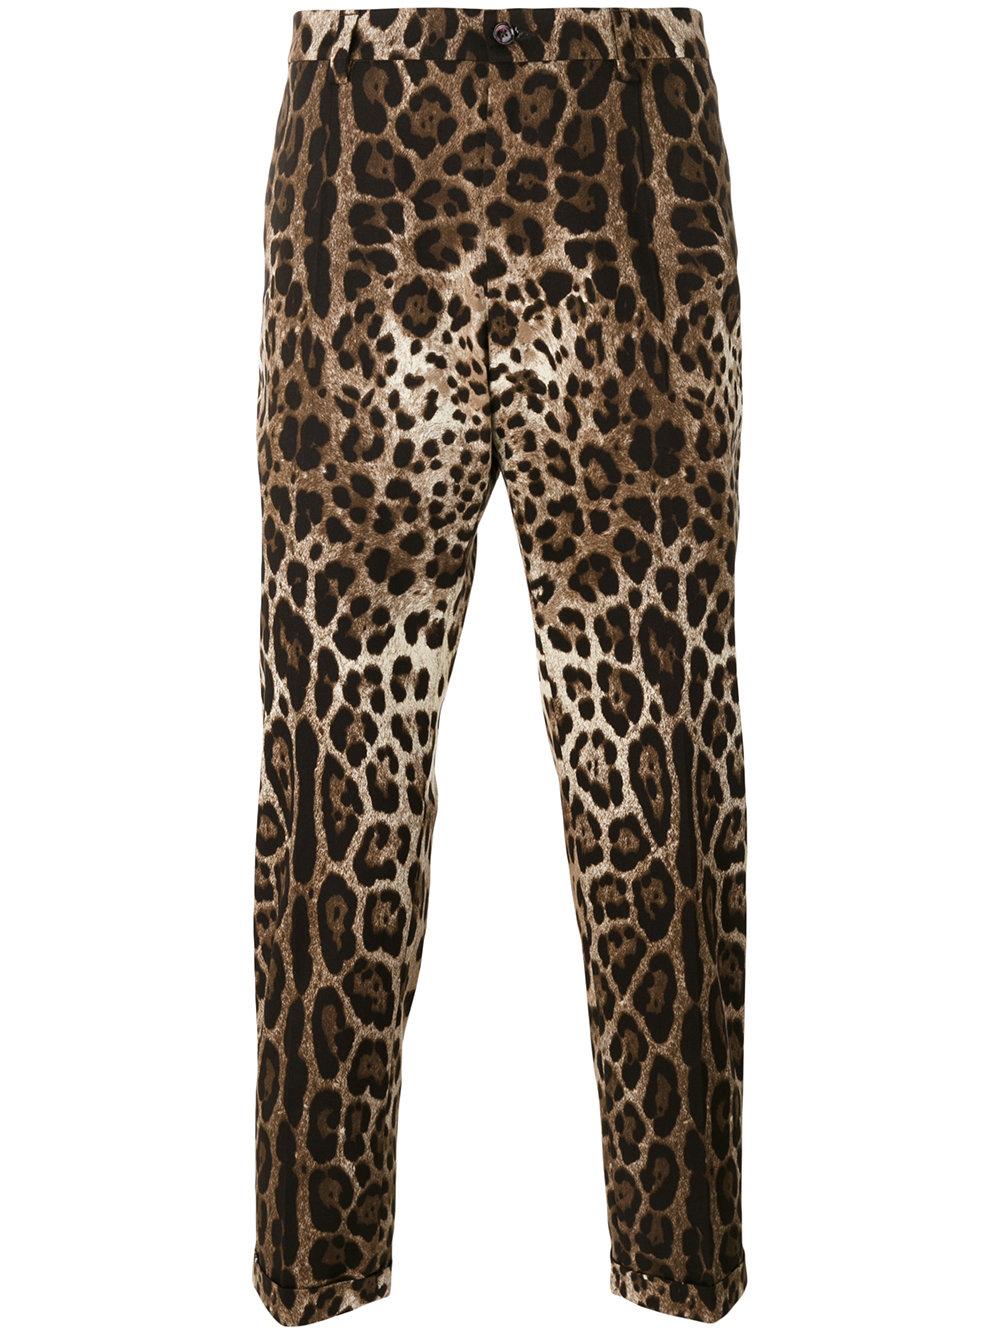 Lyst - Dolce & Gabbana Leopard Print Trousers in Brown for Men